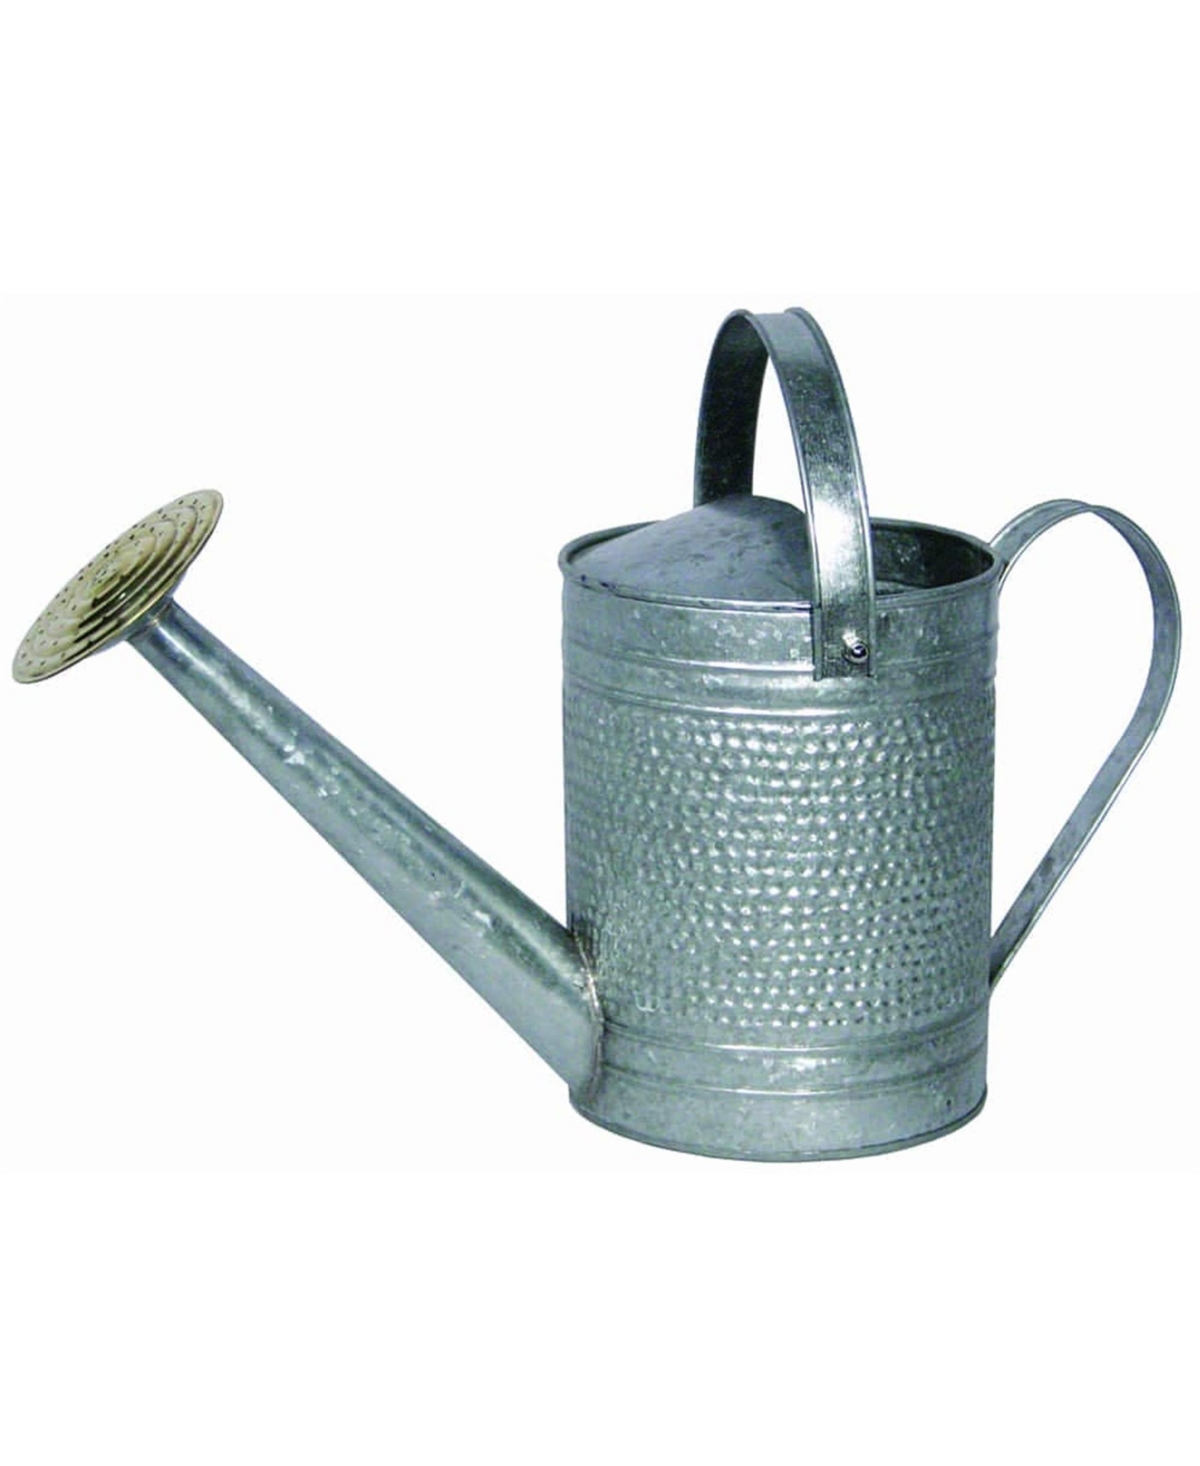 Robert Allen Home and Garden IronLite Jameson Watering Can, Galvanized - Silver